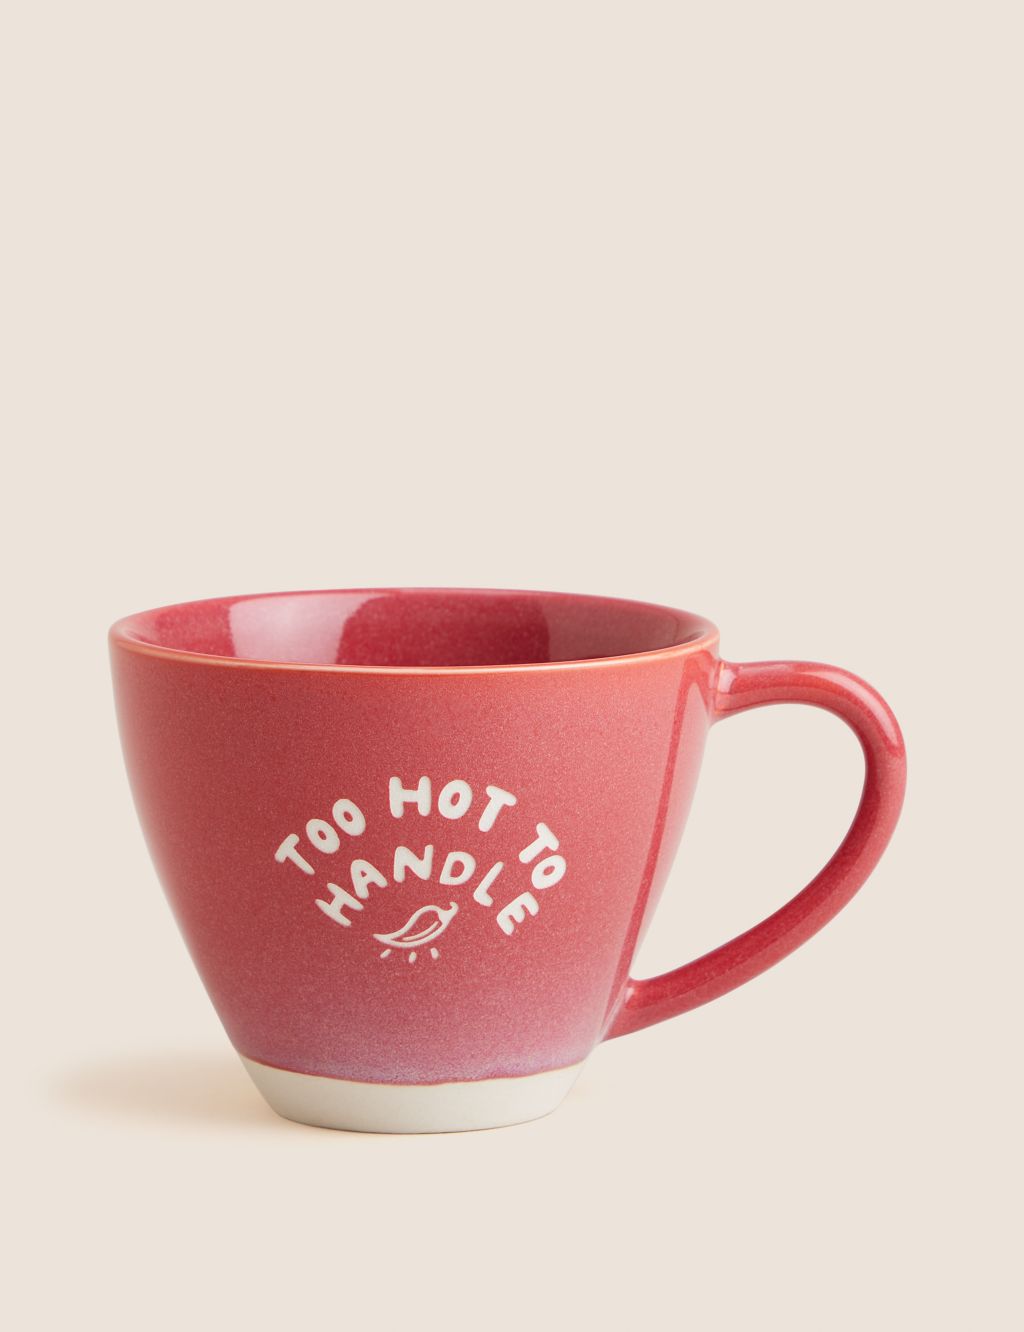 Too Hot To Handle Slogan Mug image 1